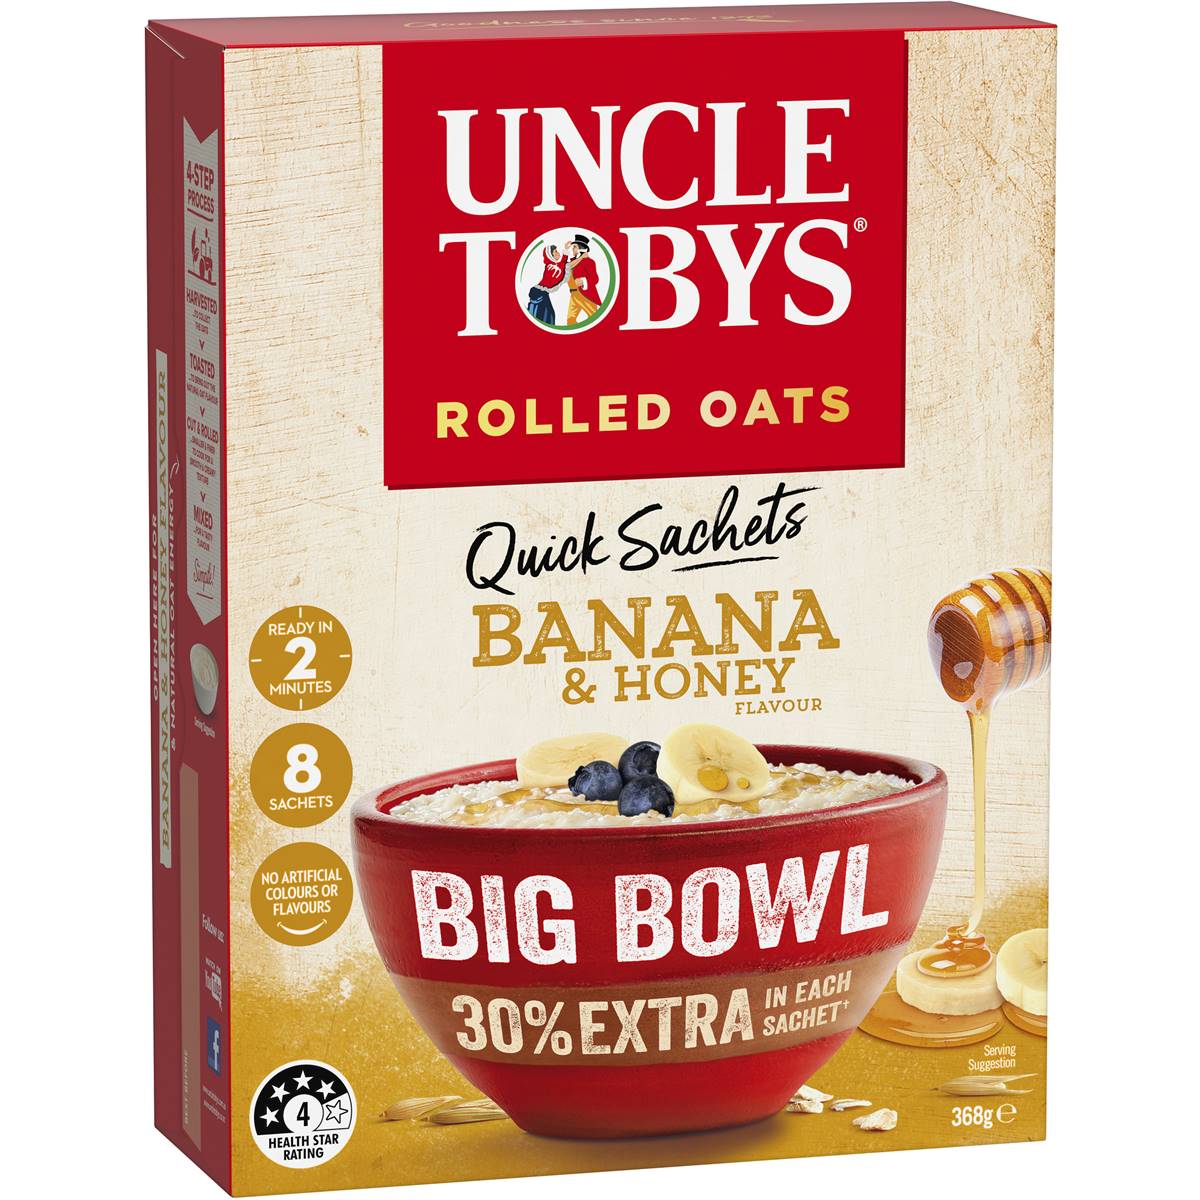 Calories in Uncle Tobys Oats Porridge Quick Sachets Banana & Honey Big Bowl